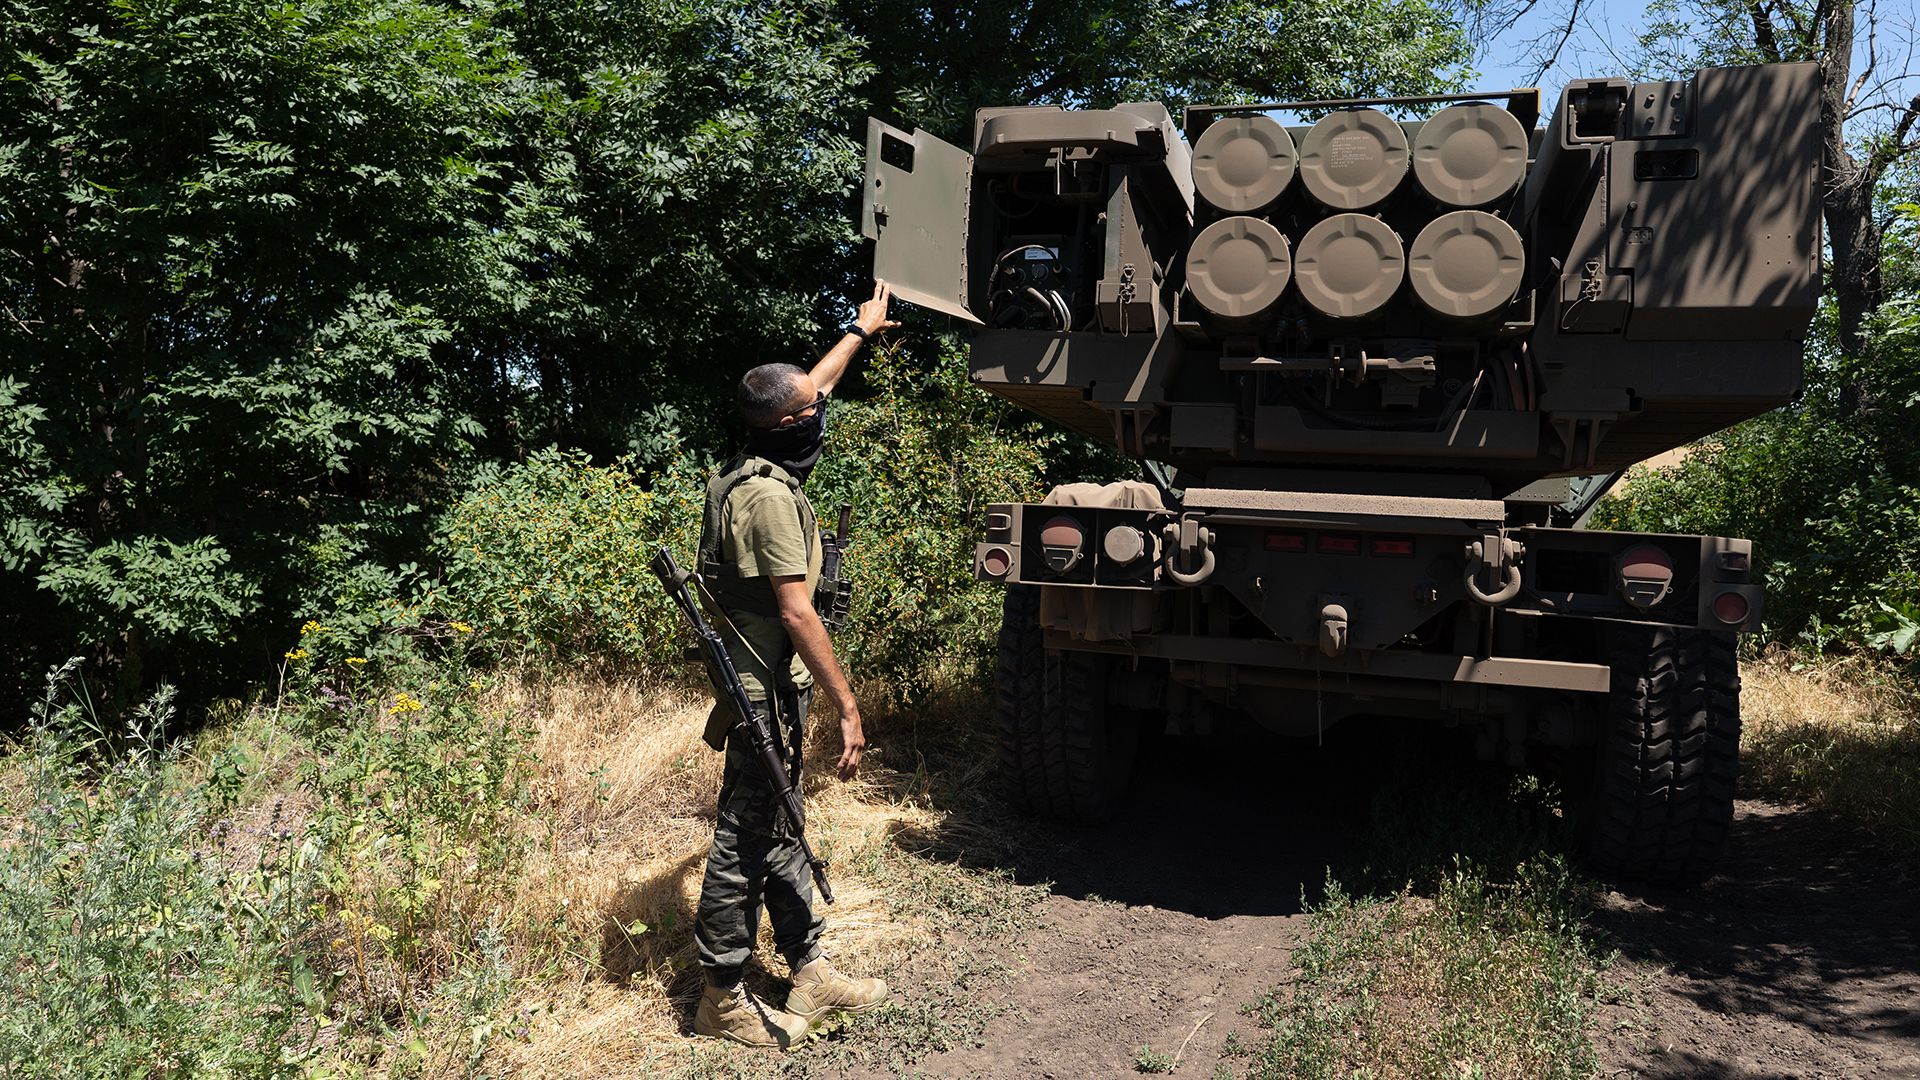 Unit commander Kuzia shows the rockets on HIMARS vehicle in Eastern Ukraine on July 1, 2022.